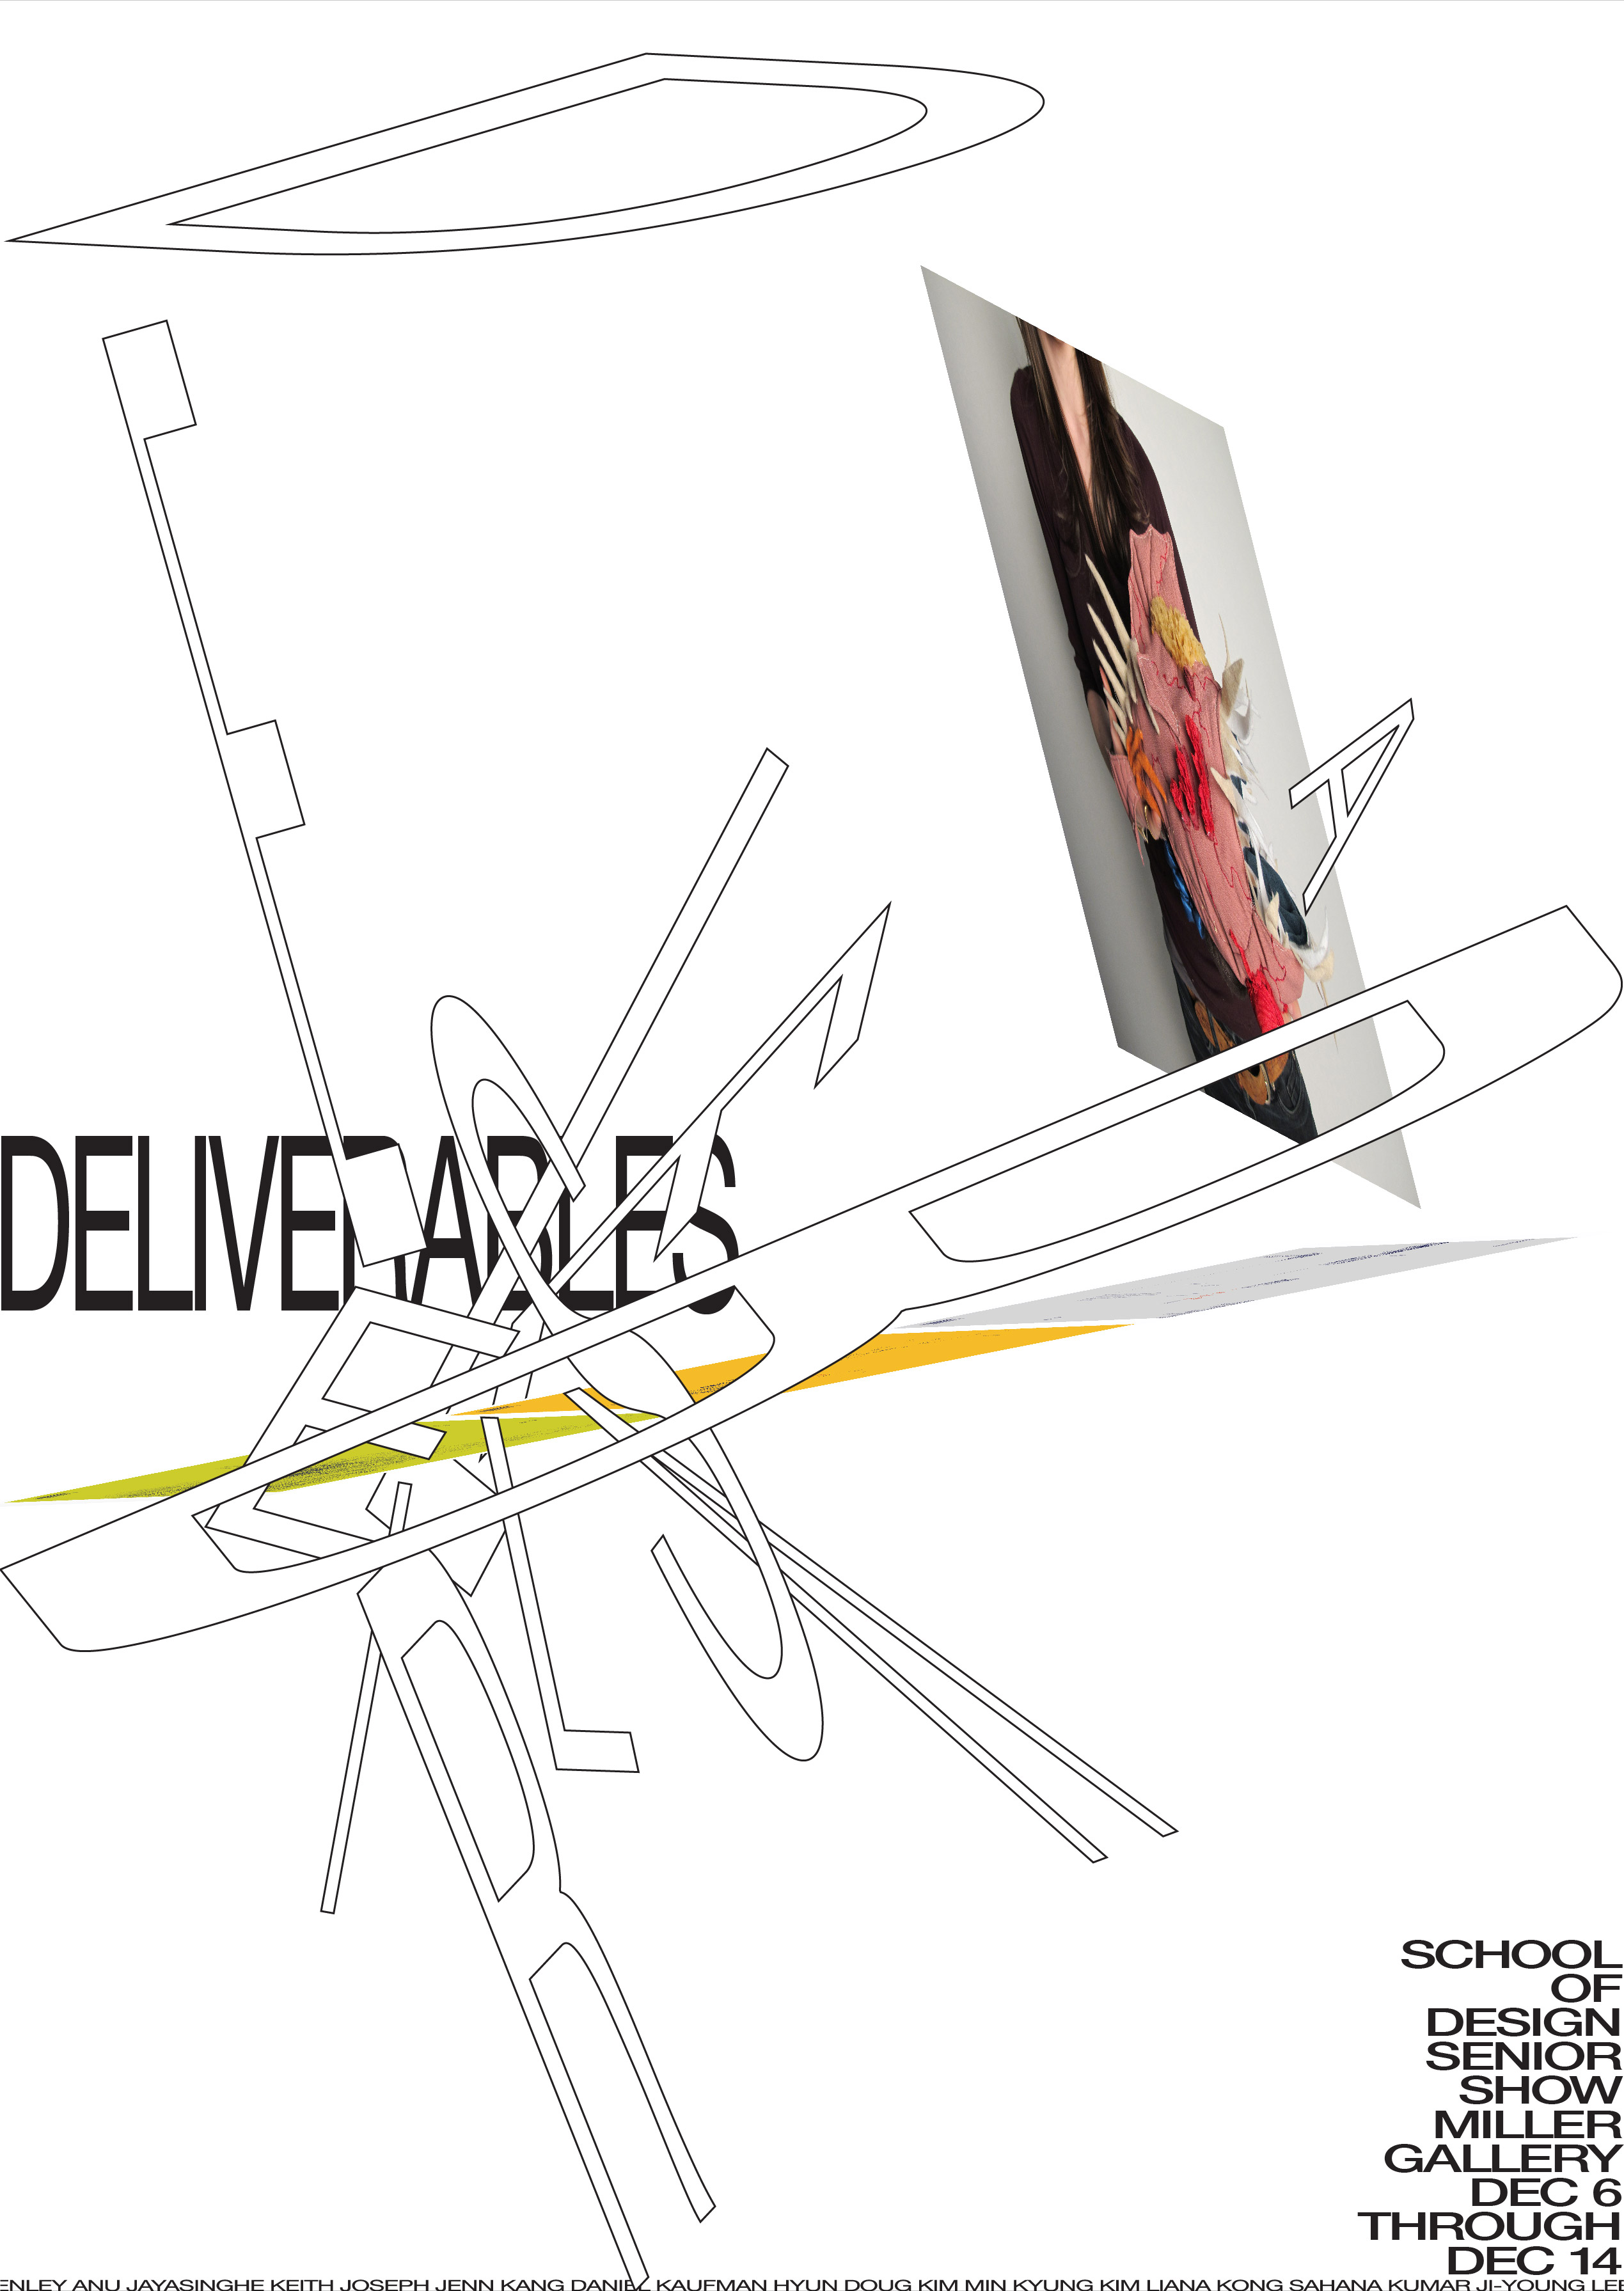 A0 Deliverables poster